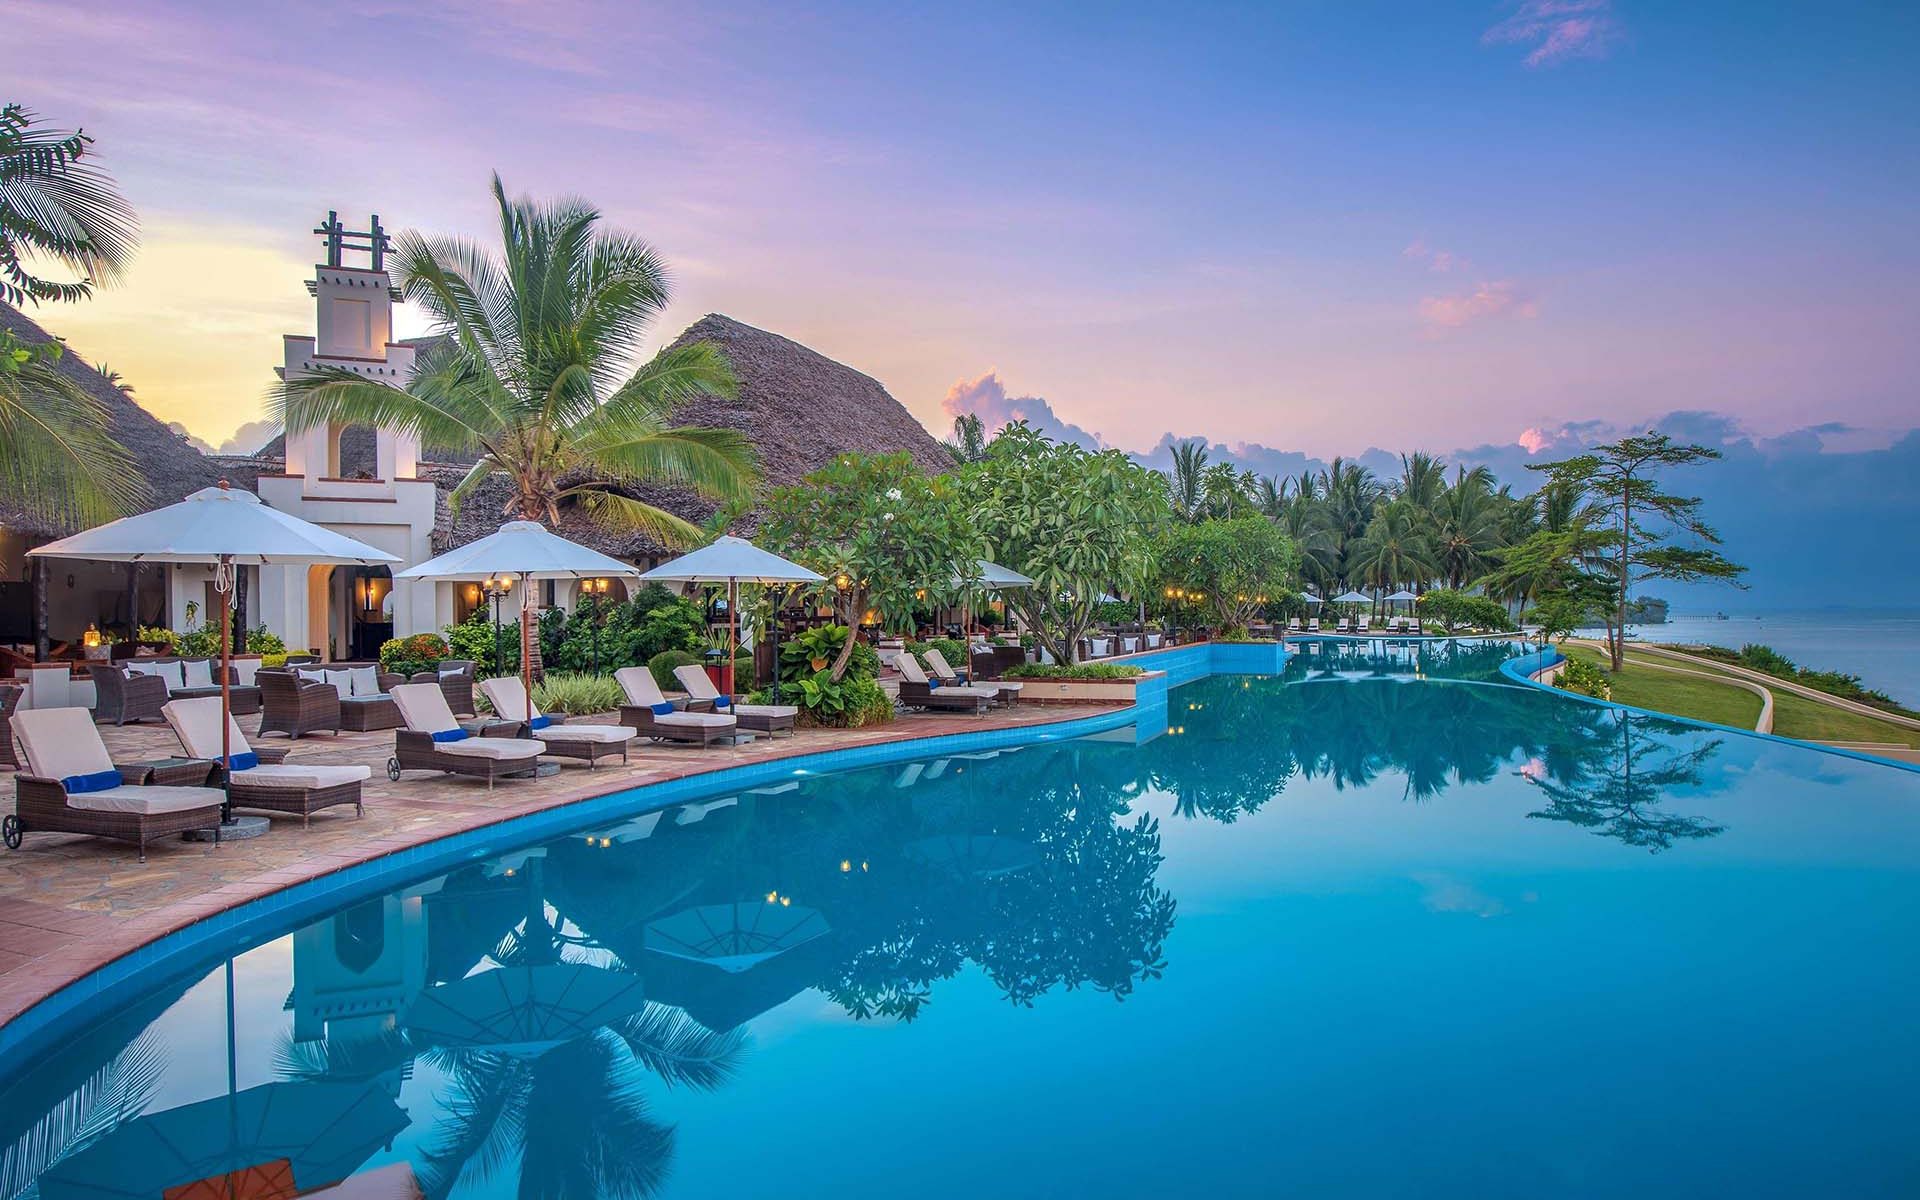 Sea Cliff Resort Zanzibar Joins Hotel Employee Rate